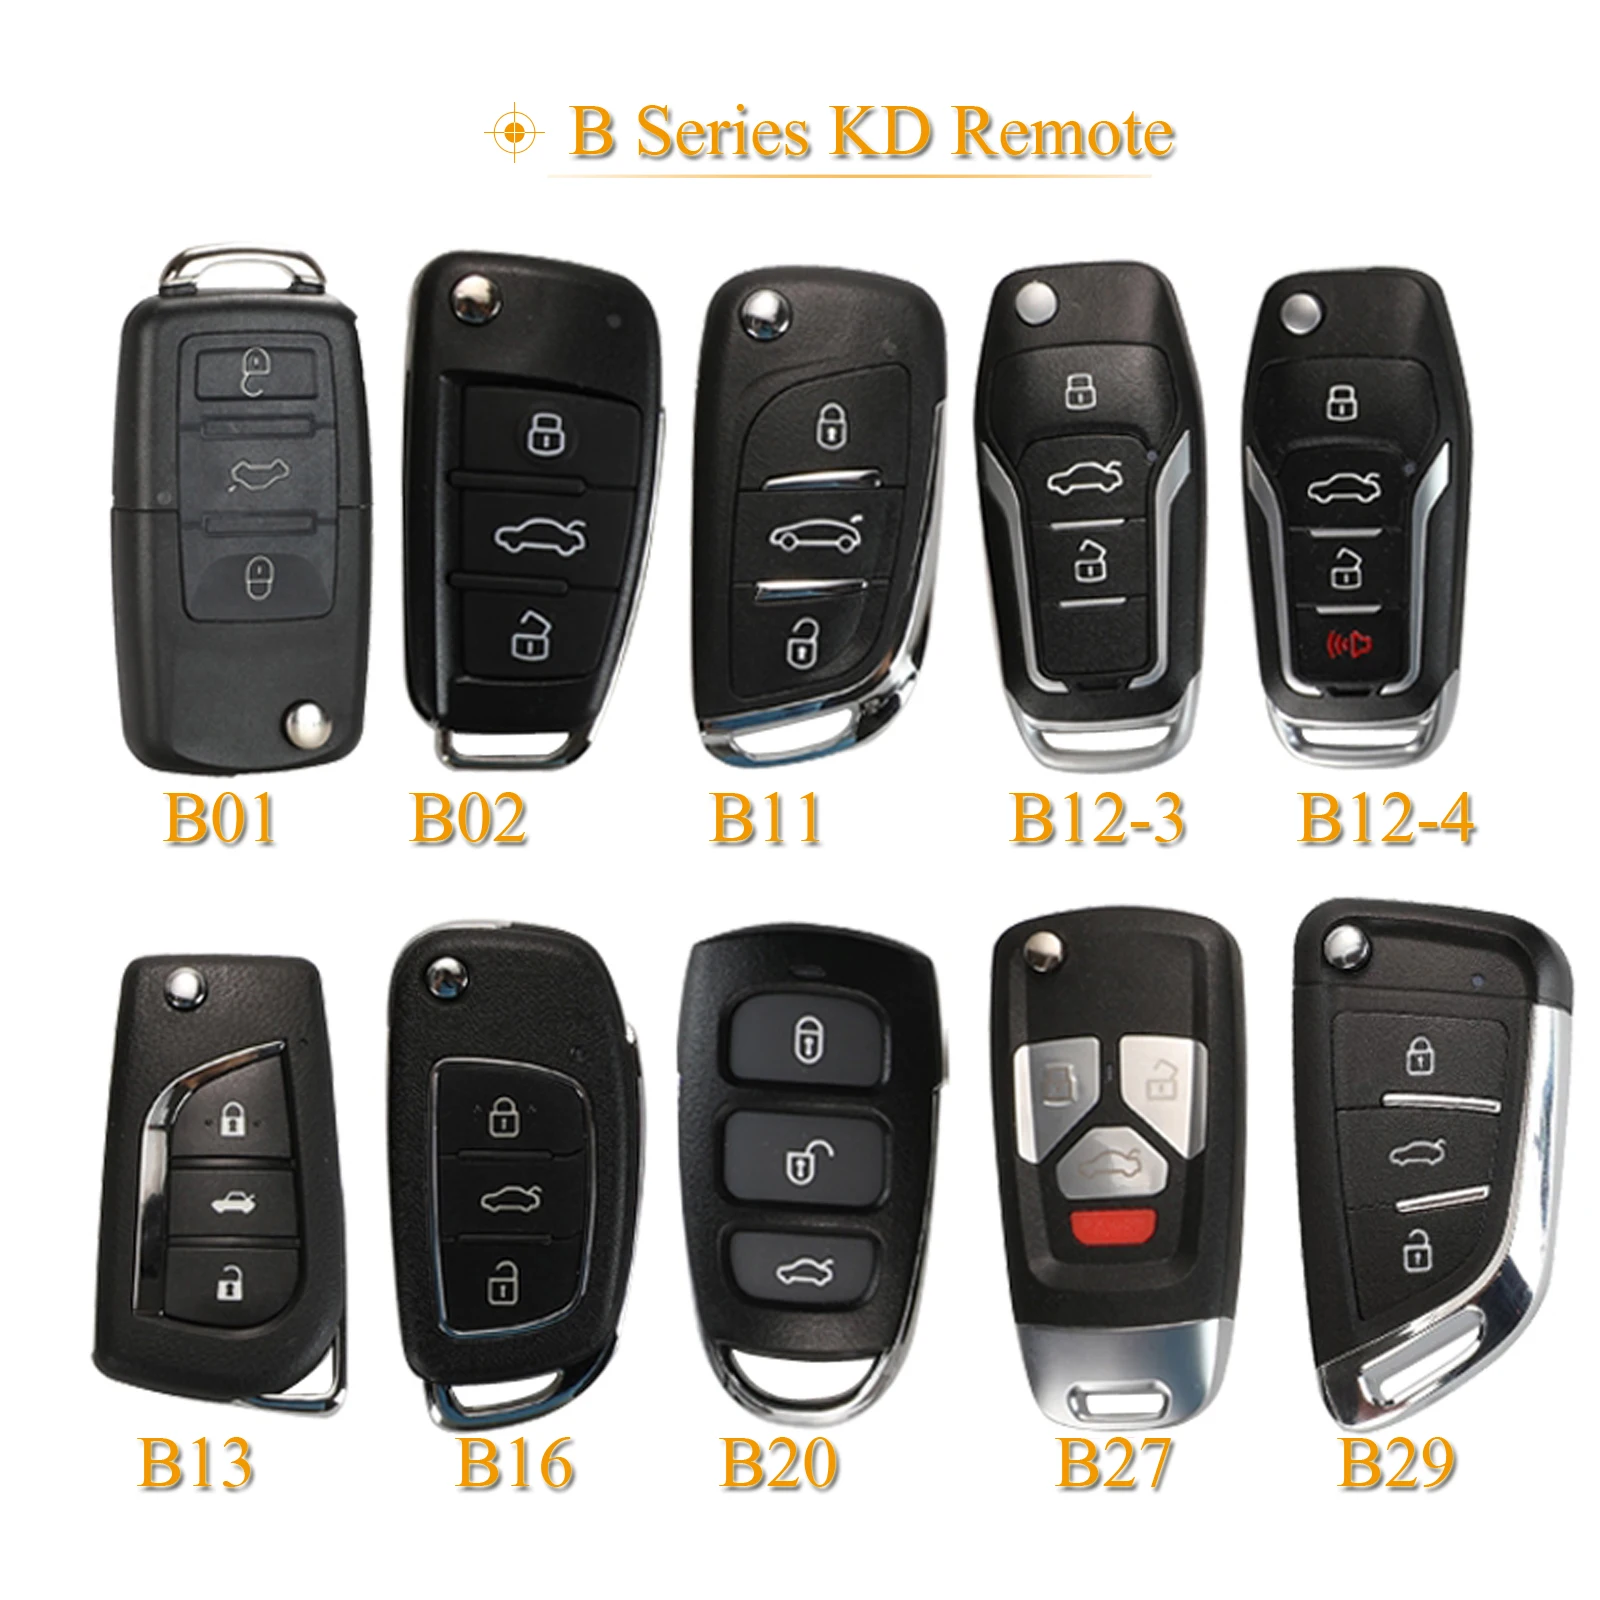 

jingyuqin Universal Remote Control Car Key For B01 B02 B11 B12 B13 B16 B20 B27 For KD900/KD-X2/URG200 B Series KD Key